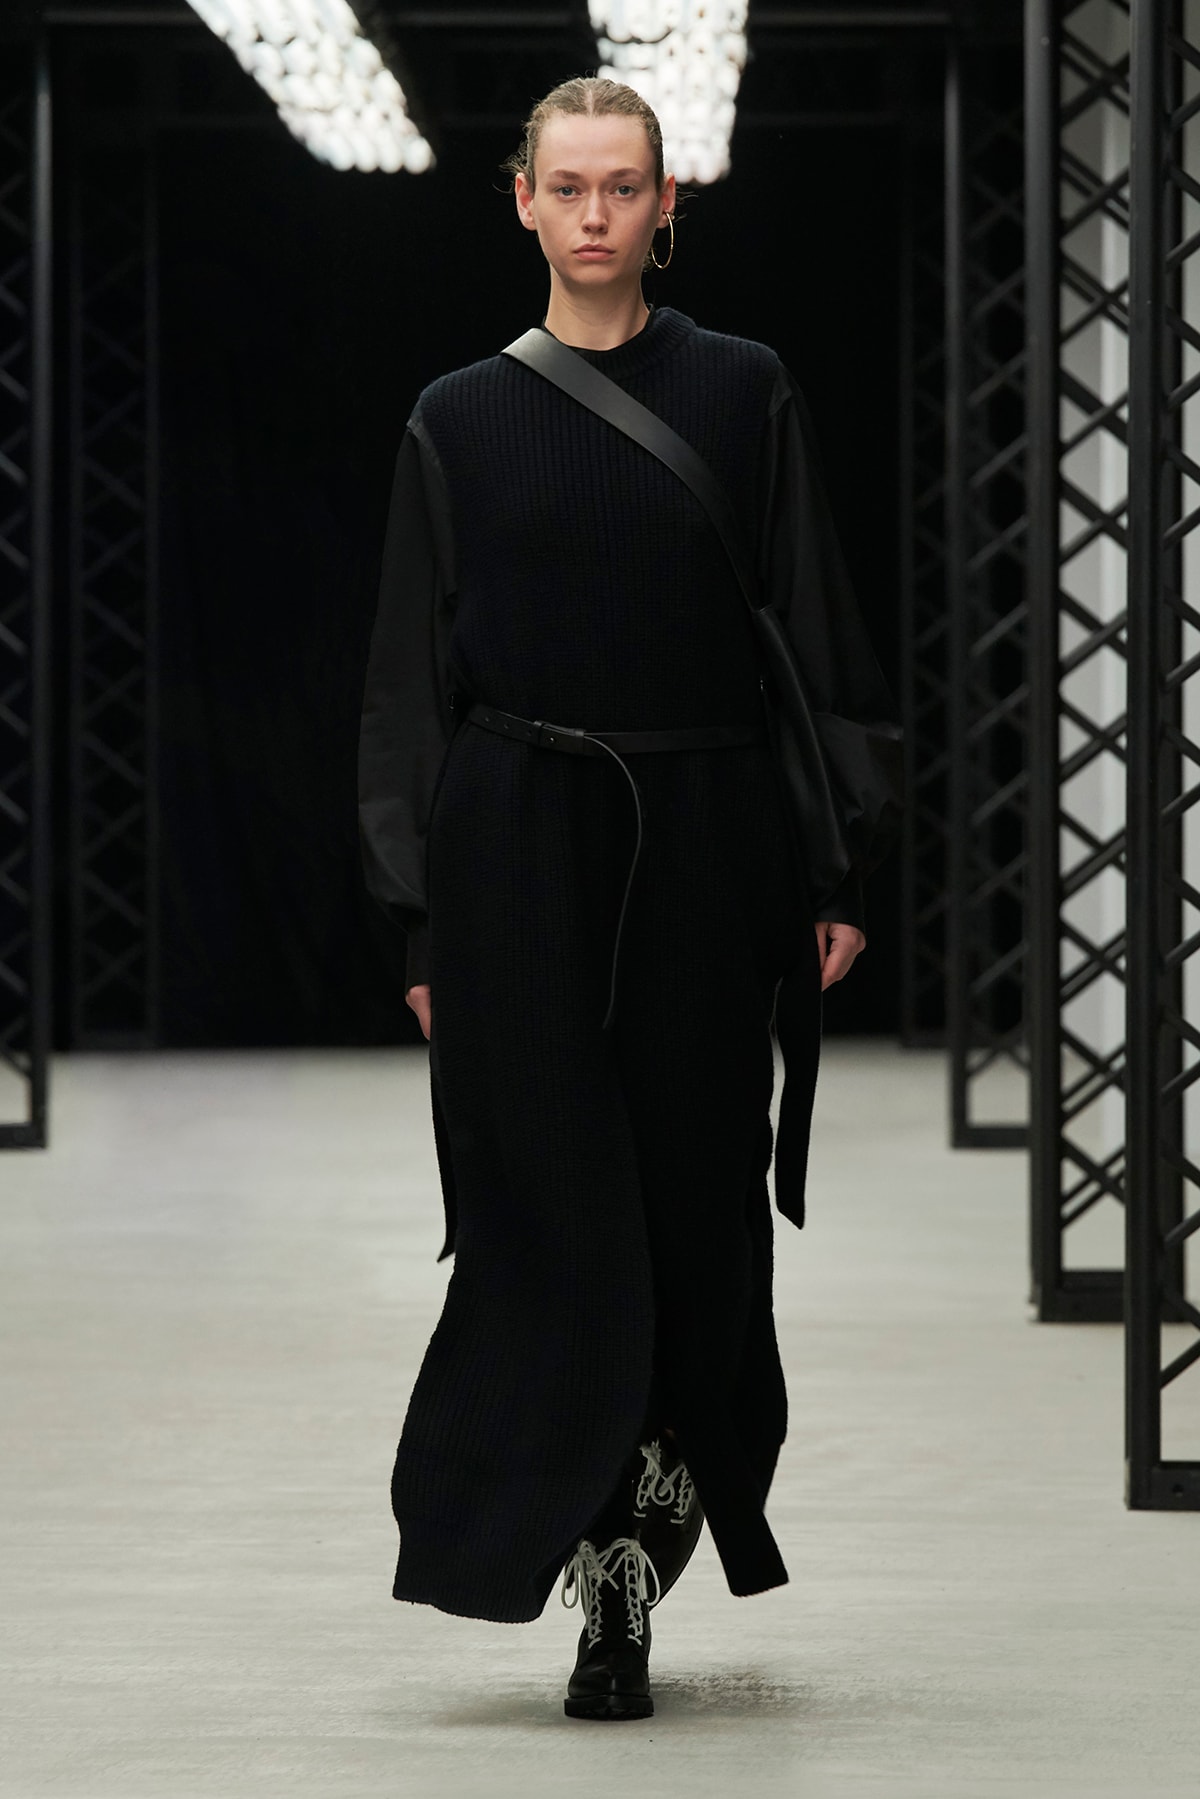 HYKE Fall/Winter 2020 Collection Runway Show Dress Black